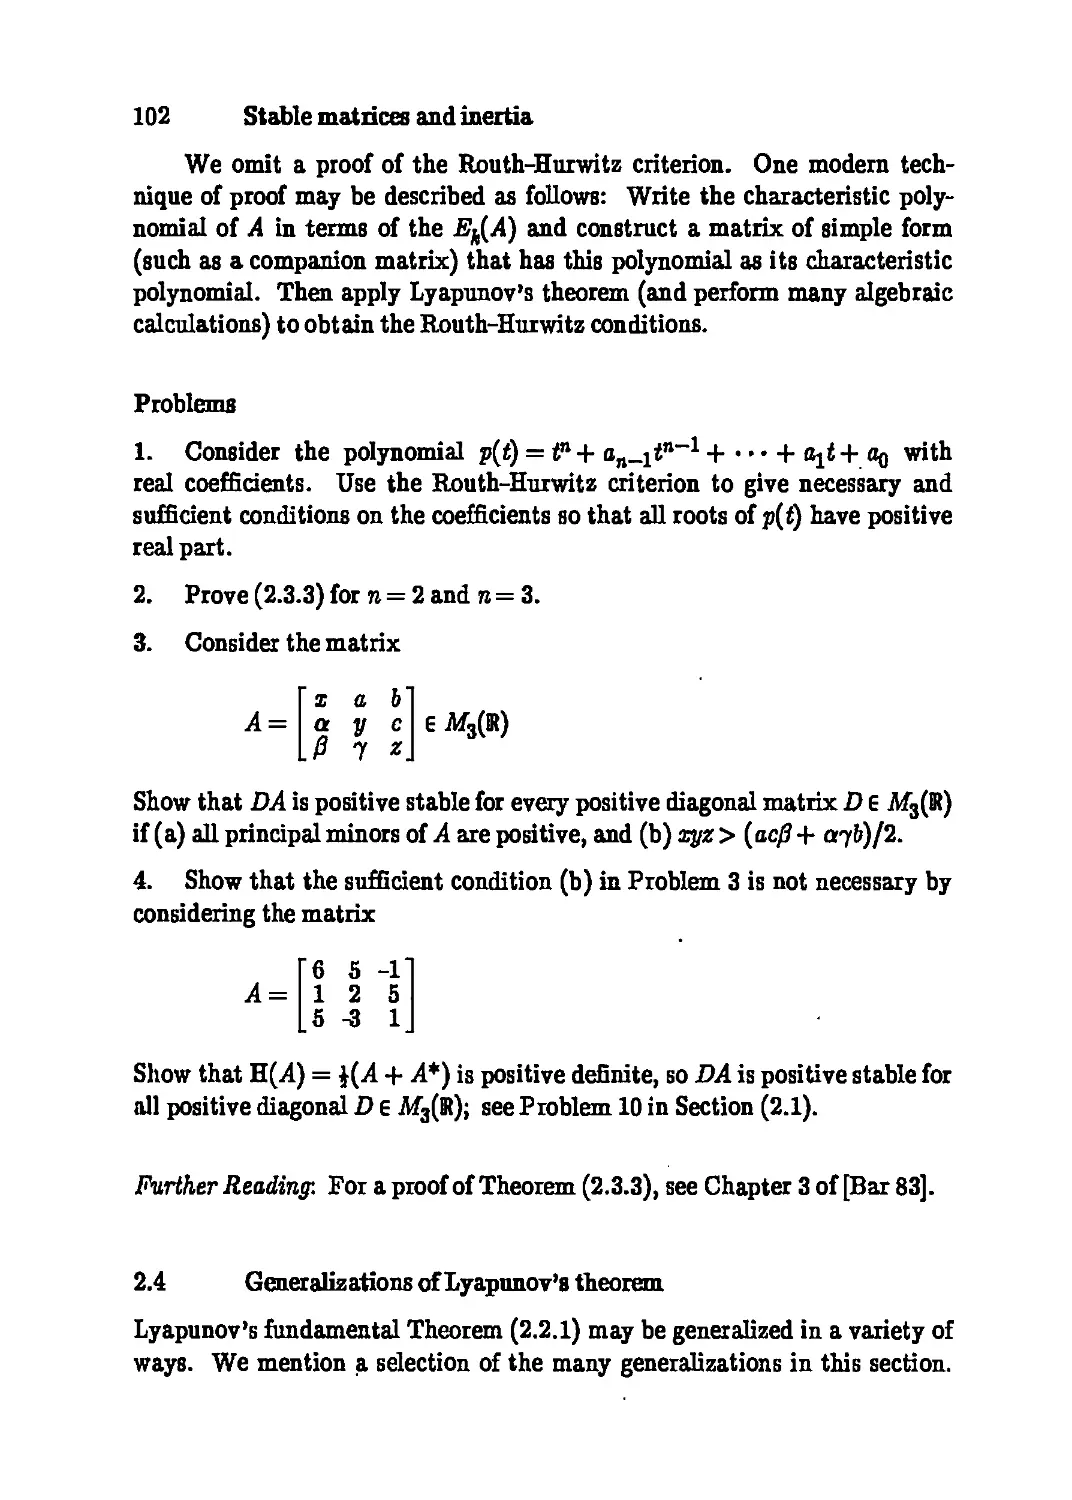 2.4 Generalizations of Lyapunov's theorem